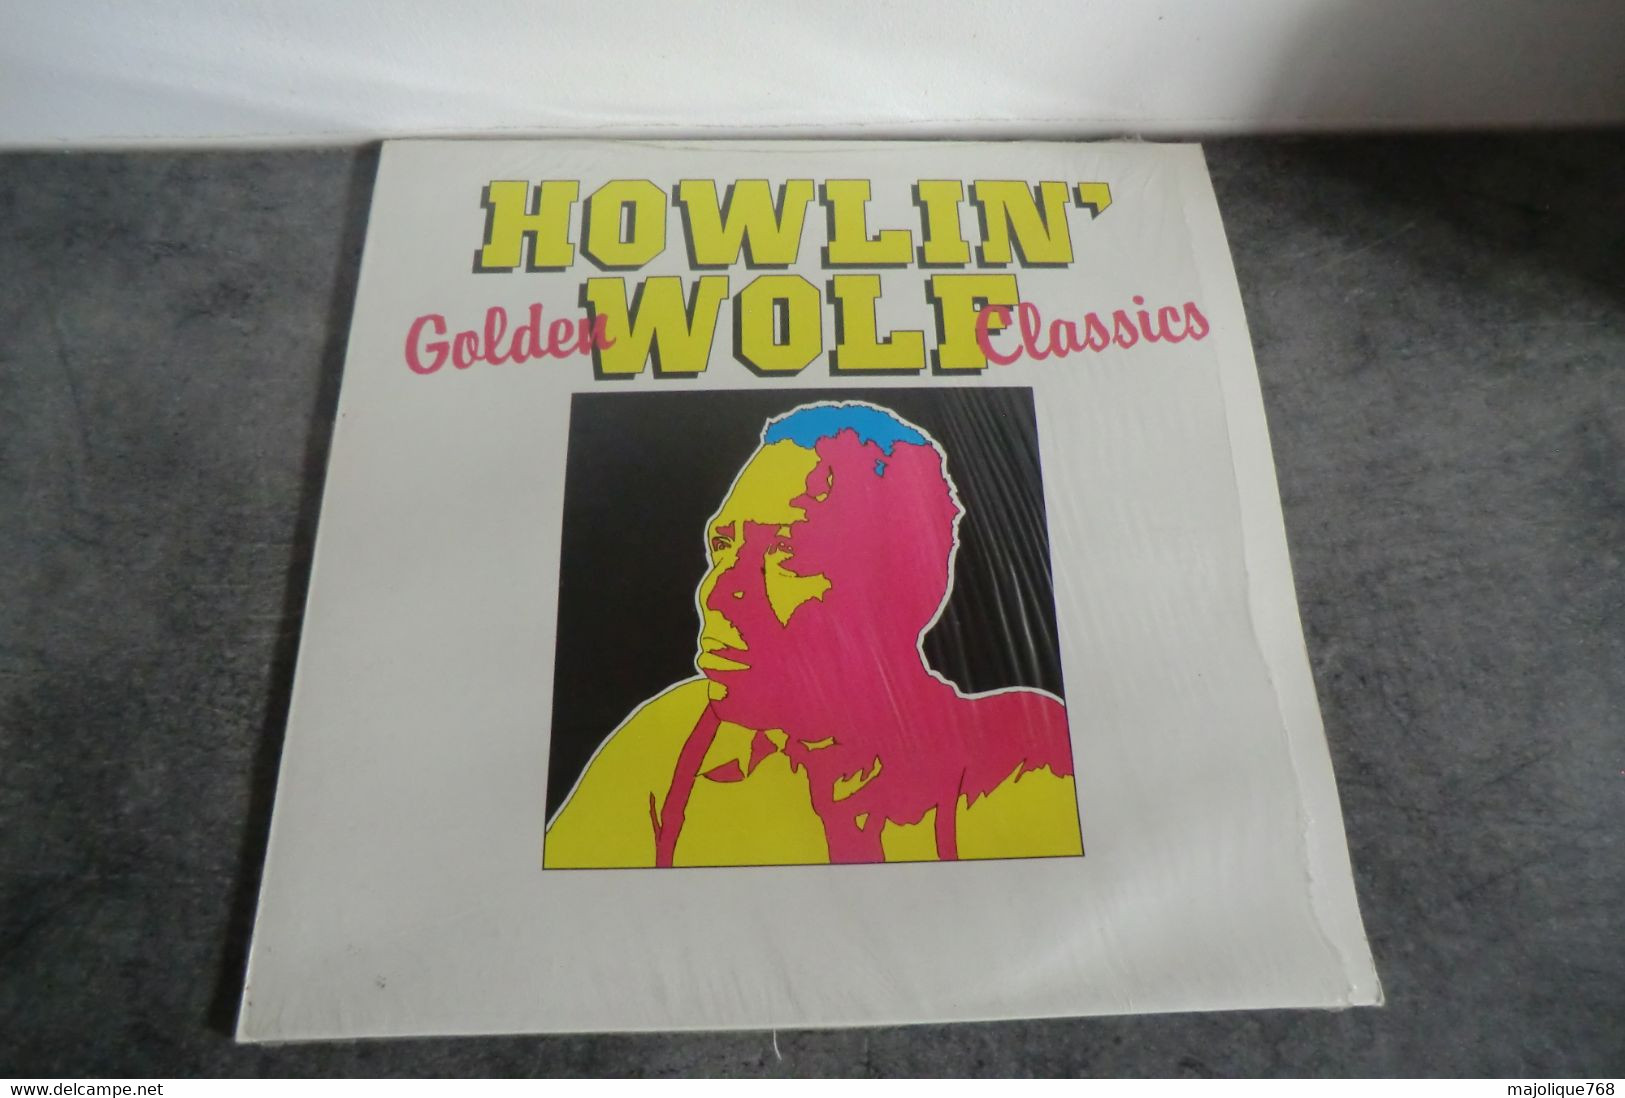 Disque - Howlin' Wolf - Golden Classics - Astan 20019 - Germany 1984 - Blues